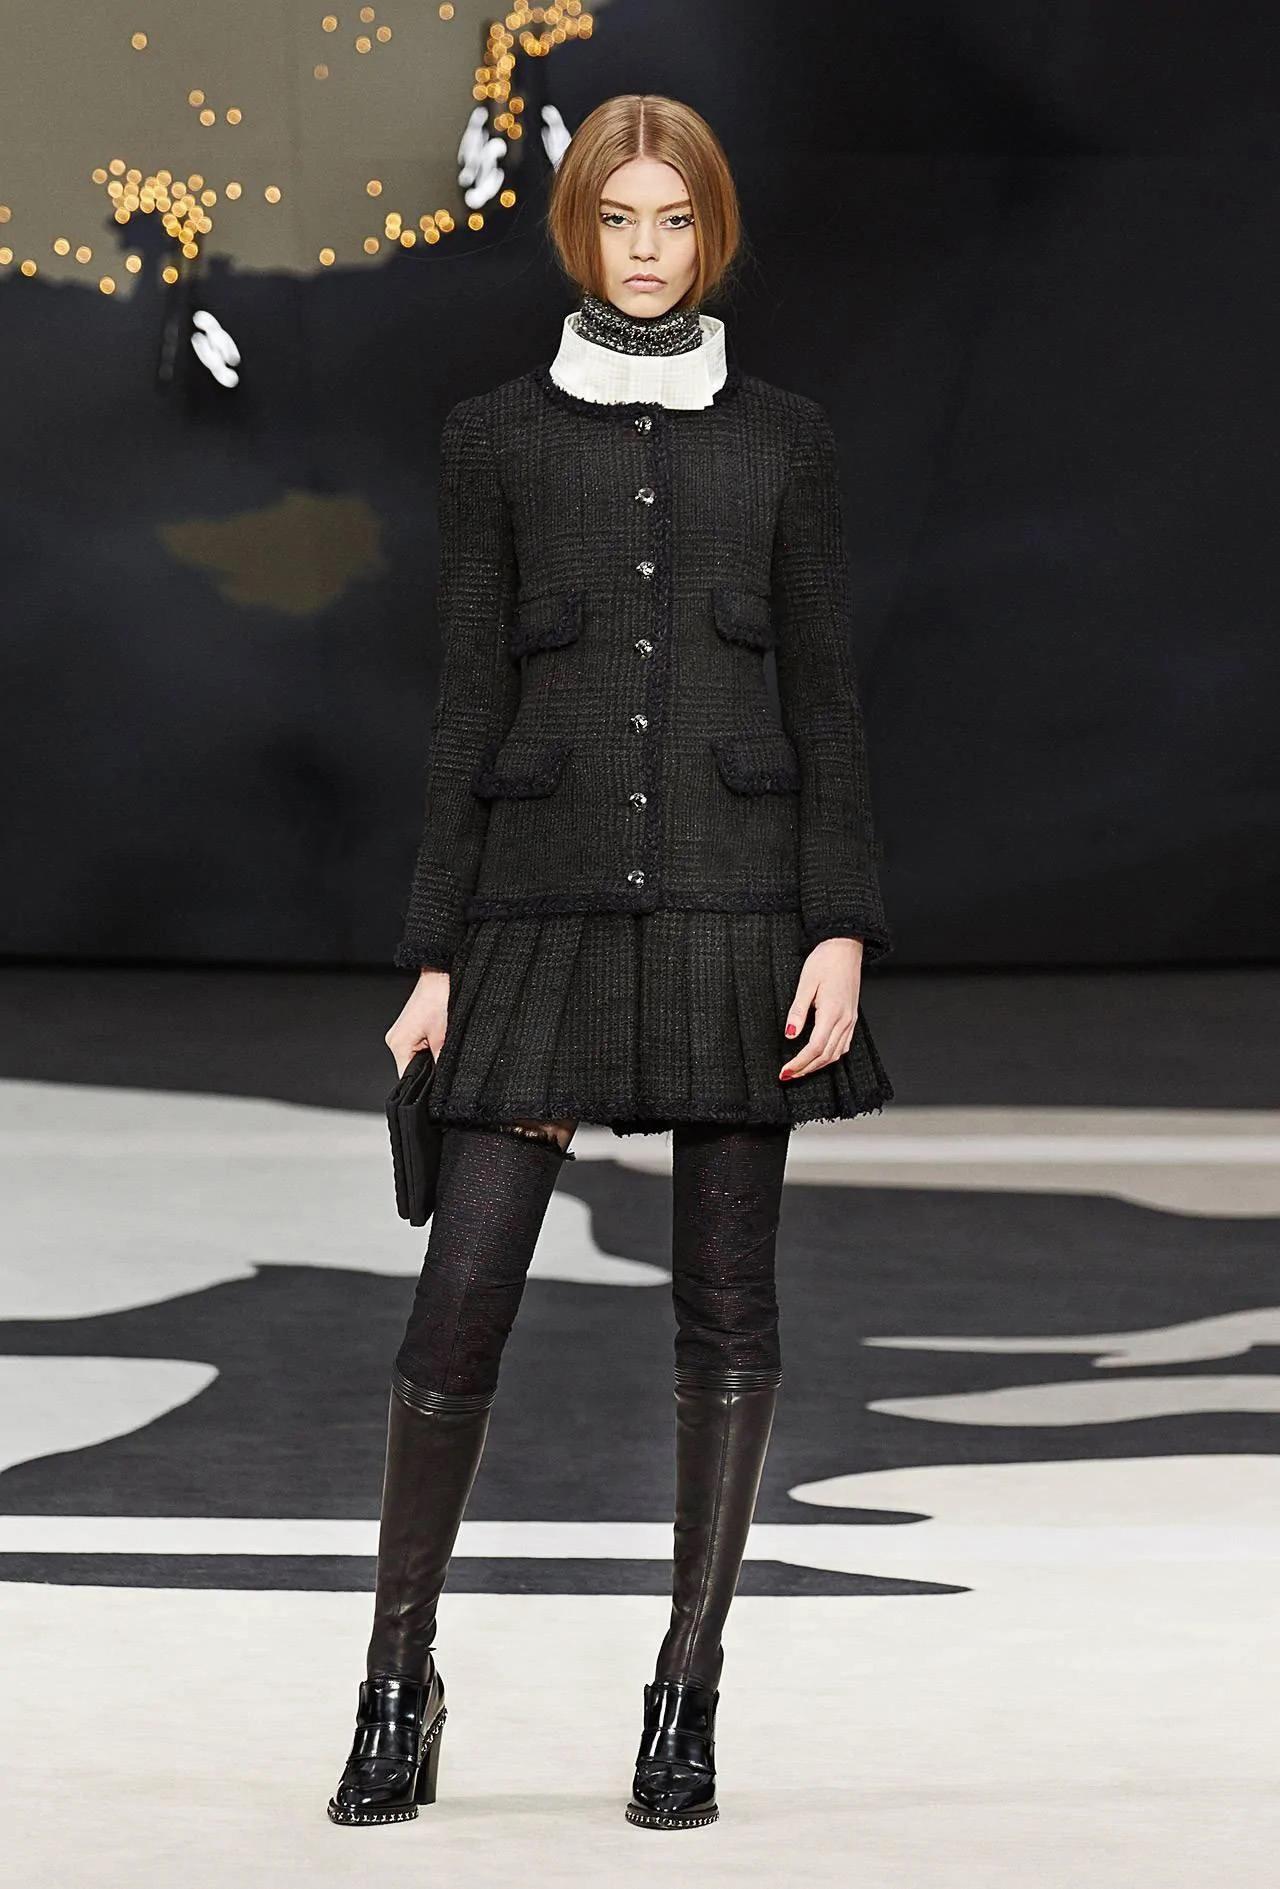 Chanel Iconic Keira Knightley Style Black Tweed Jacket 2